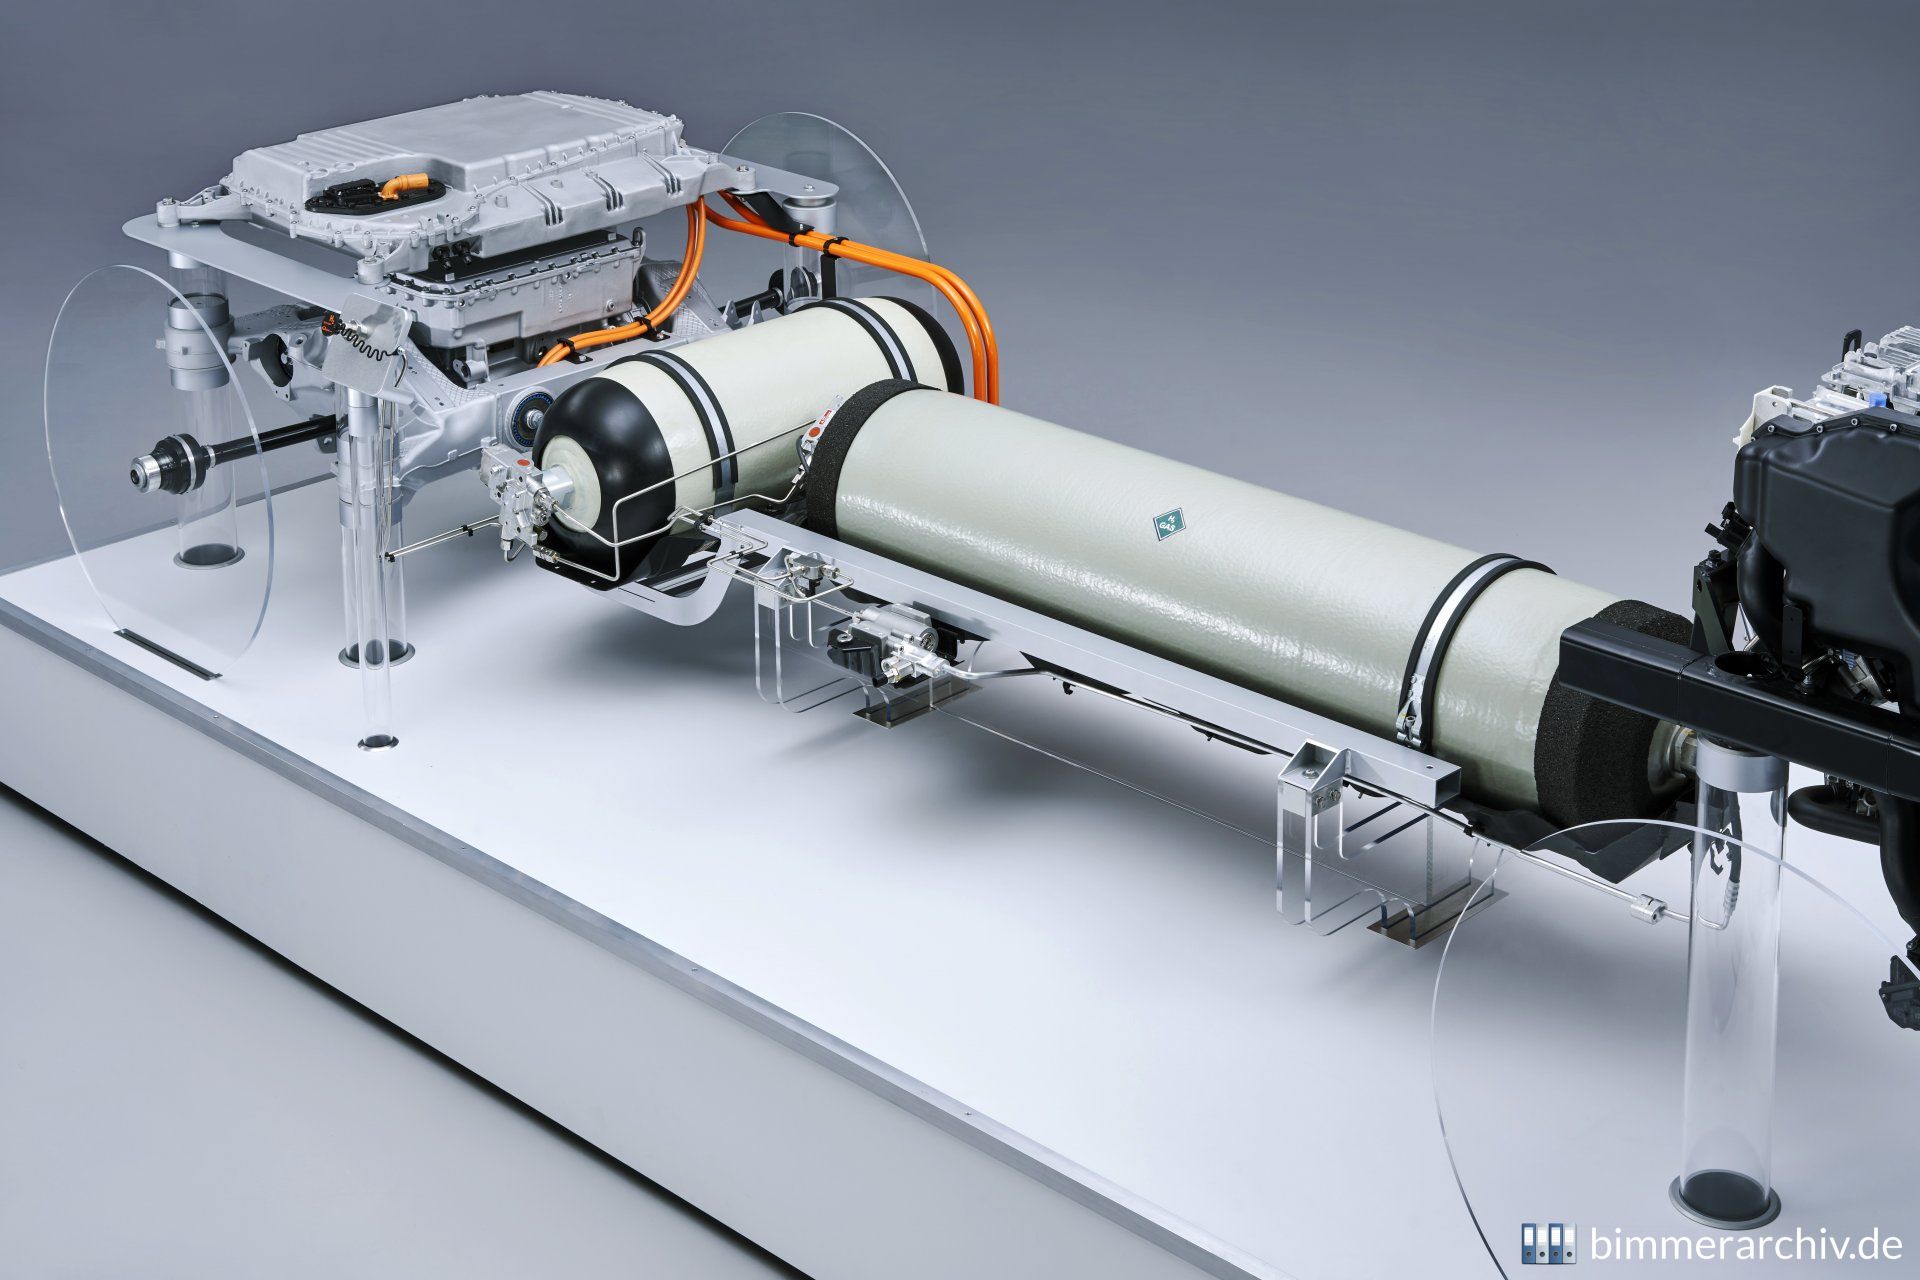 BMW i Hydrogen NEXT - Tanksystem